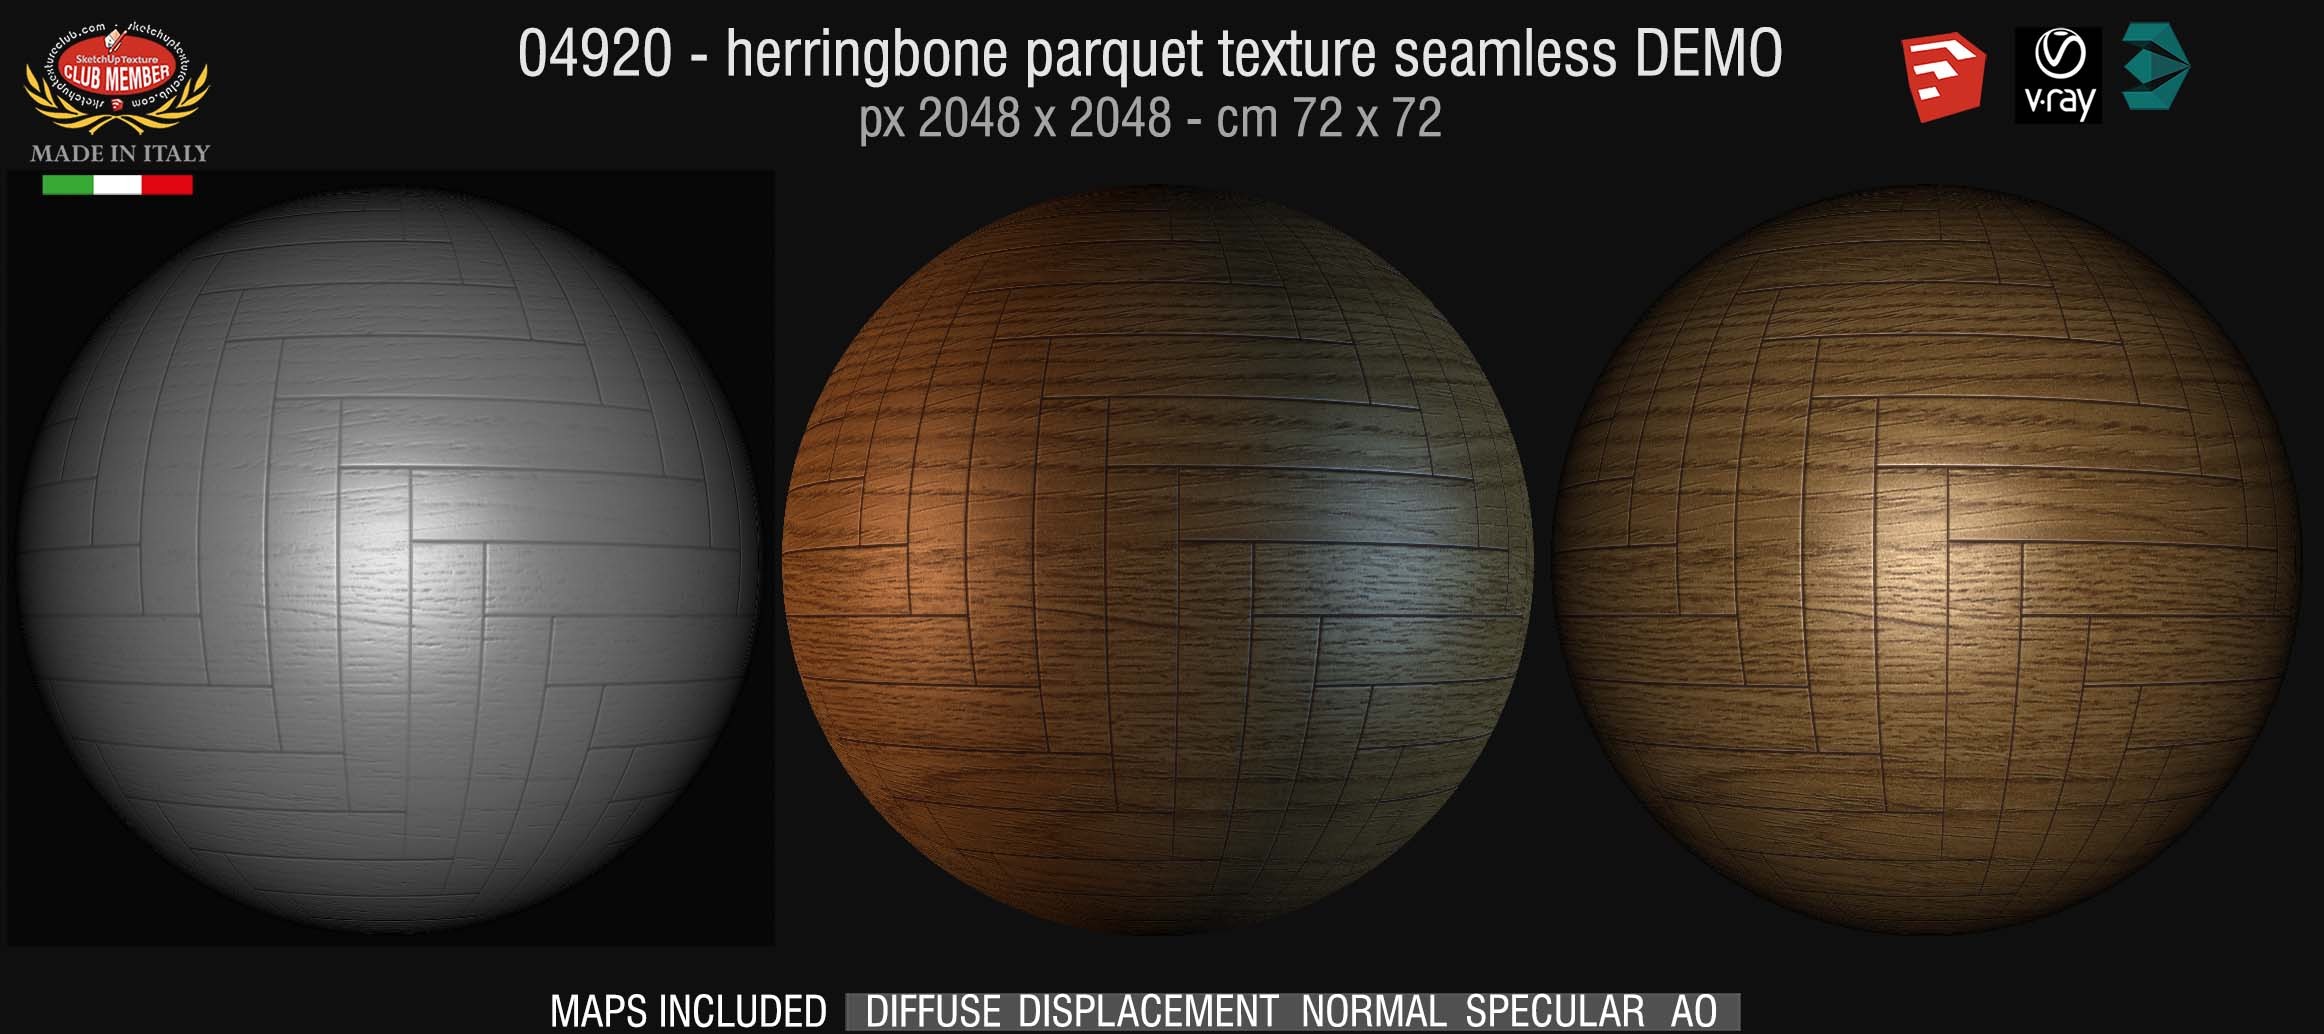 04920 HR Herringbone parquet texture seamless + maps DEMO